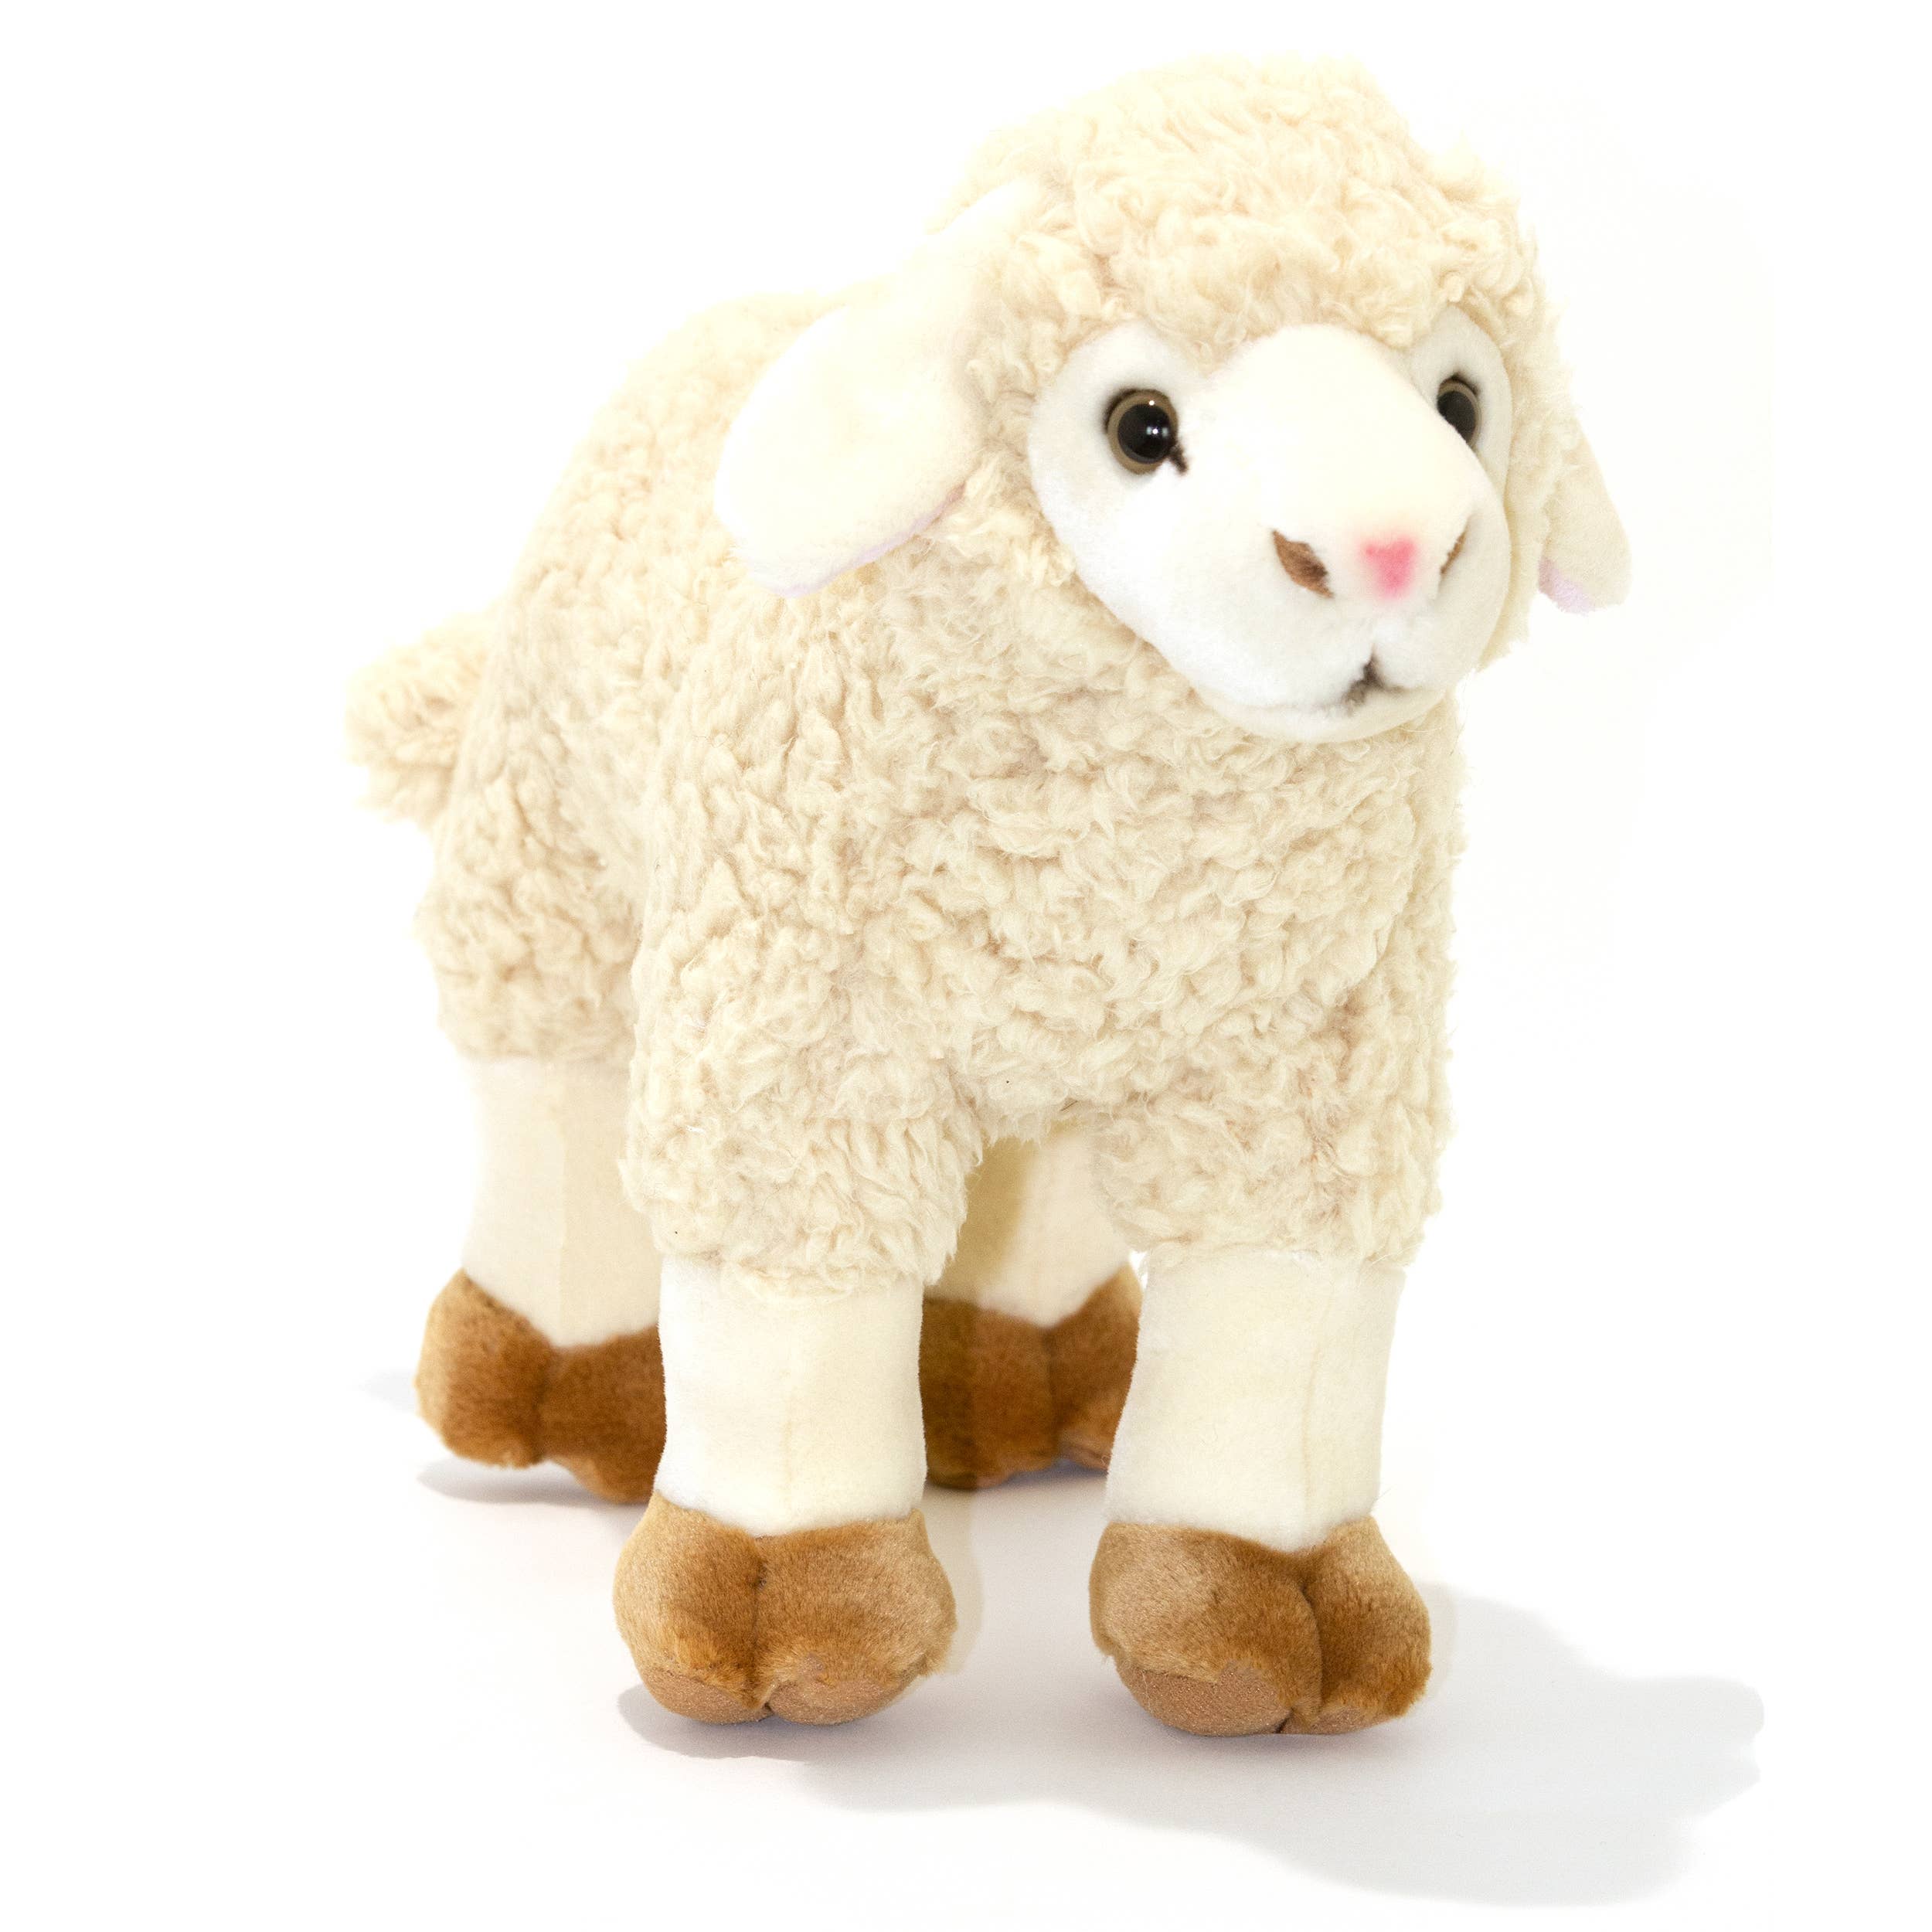 Plush Cream Sheep Size 22cm/8.7"  Lifelike Handmade Eco Friendly